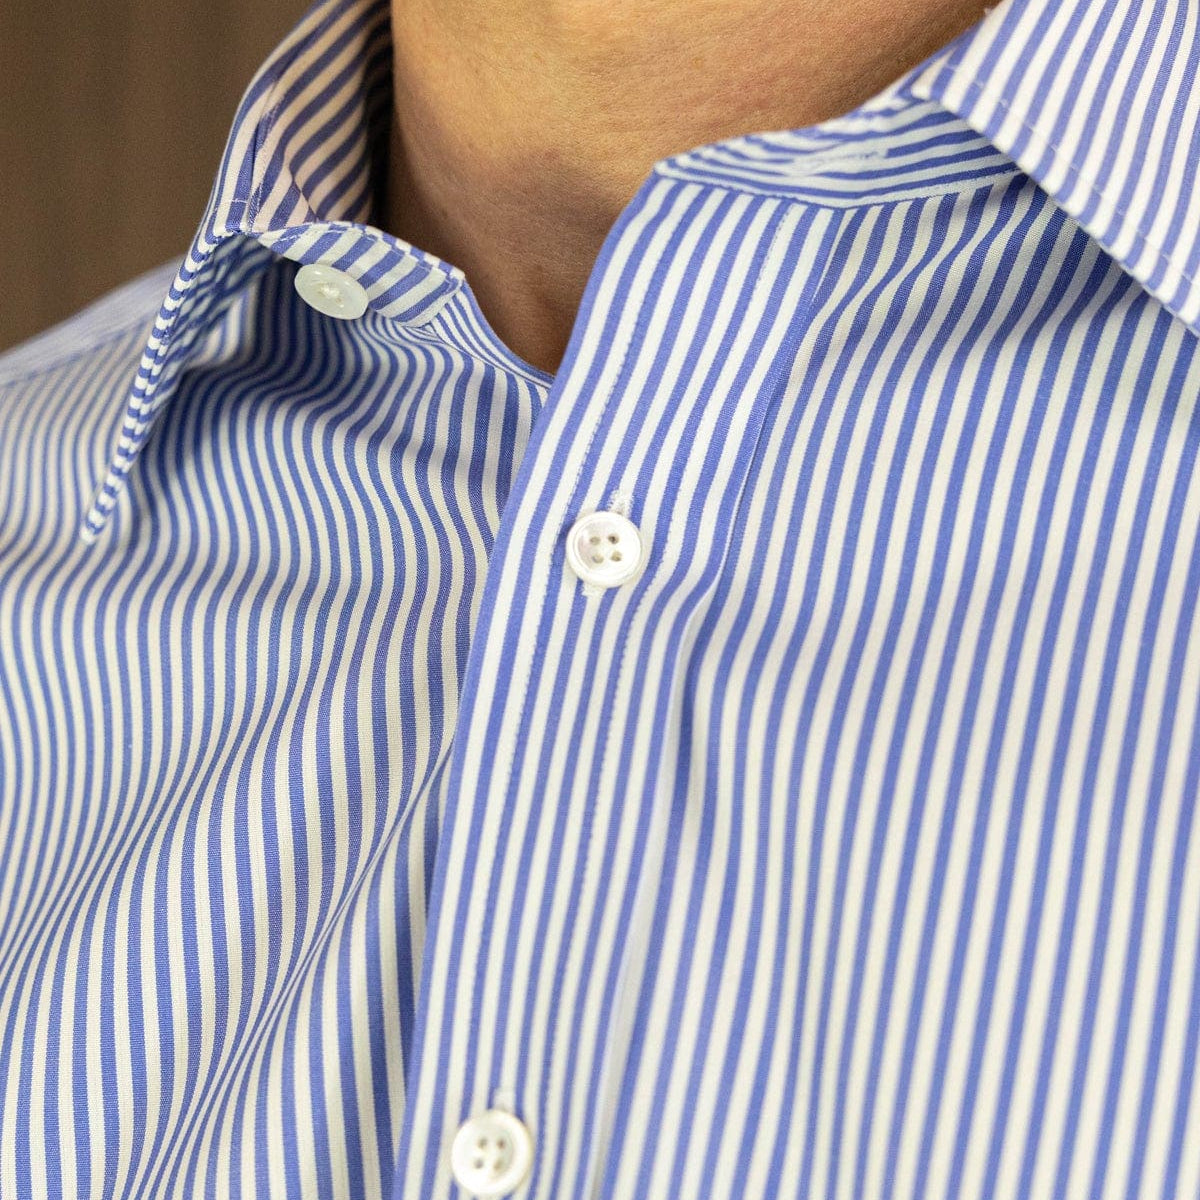 Classic Fit, Classic Collar, Double Cuff Shirt in a Blue & White Medium Bengal Poplin Cotton